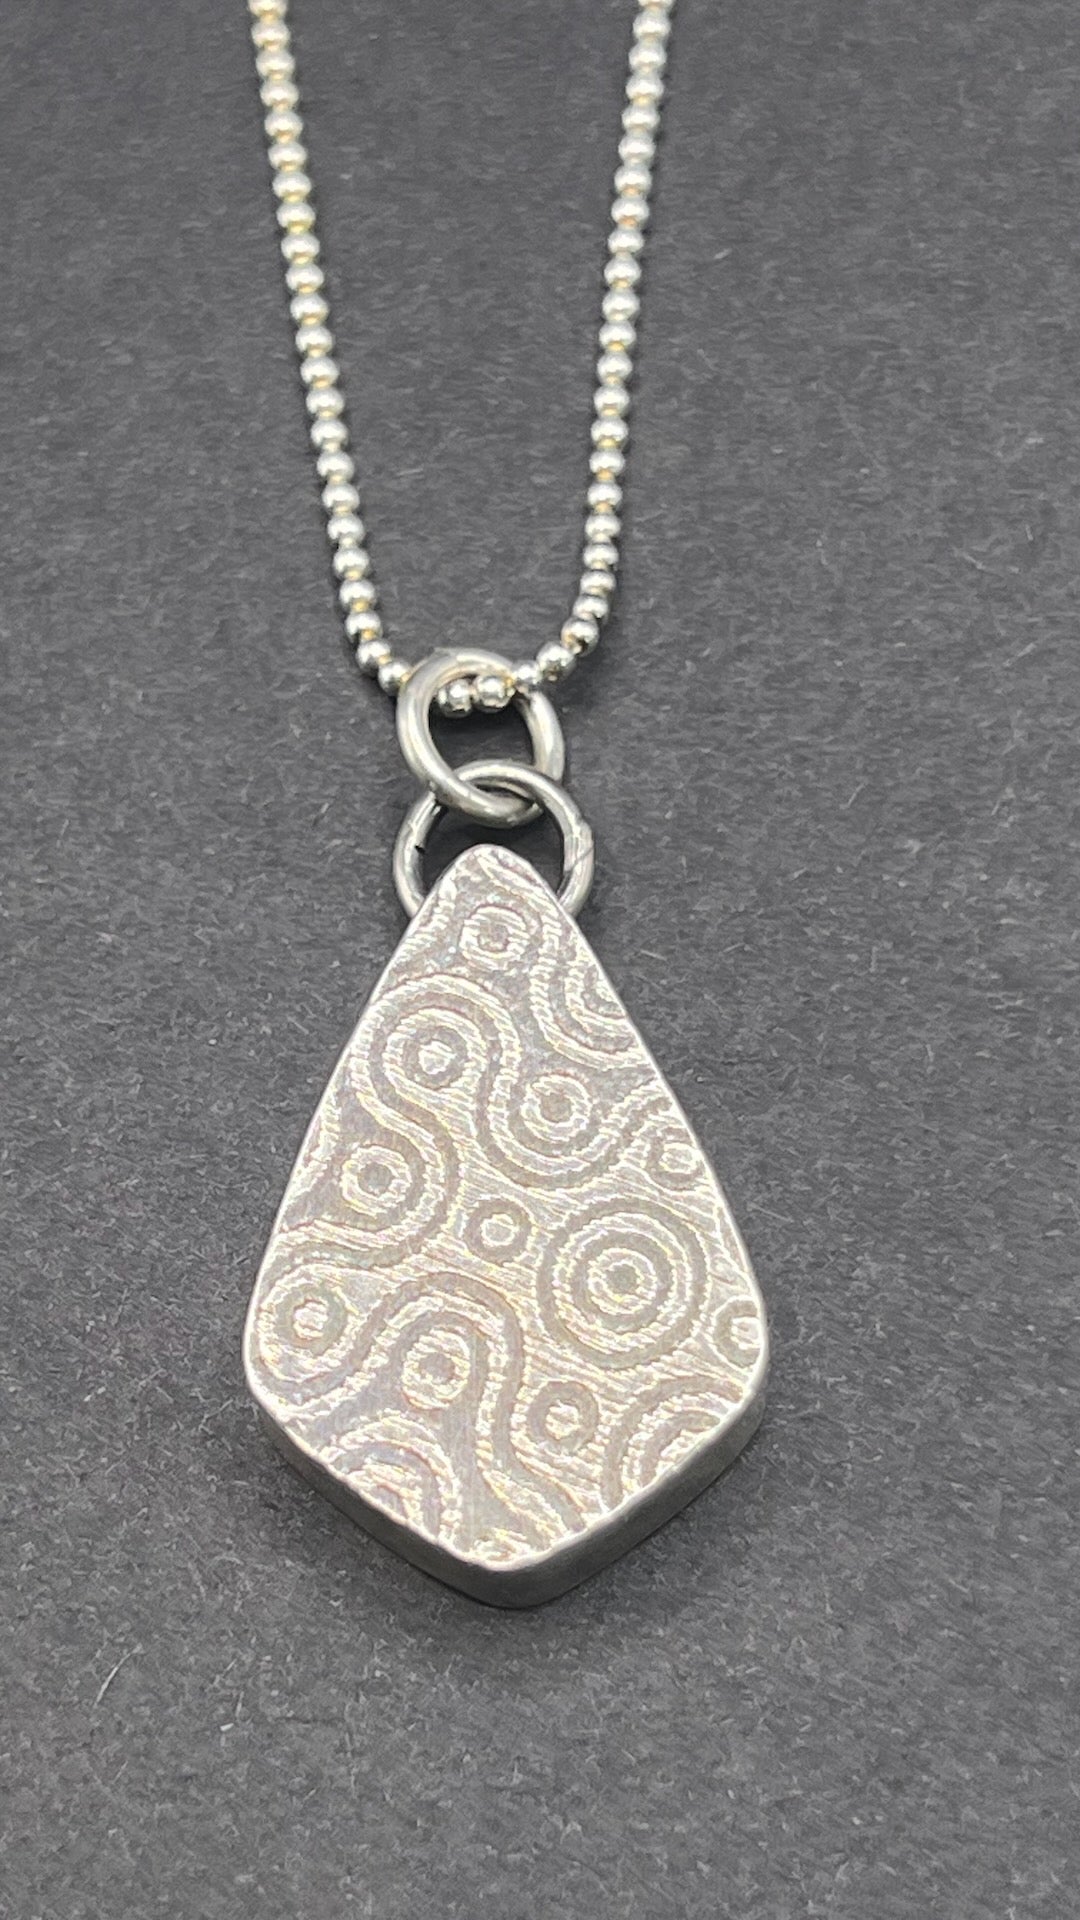 Hollow form, reversible teardrop pendant (pebble/spiral pattern)